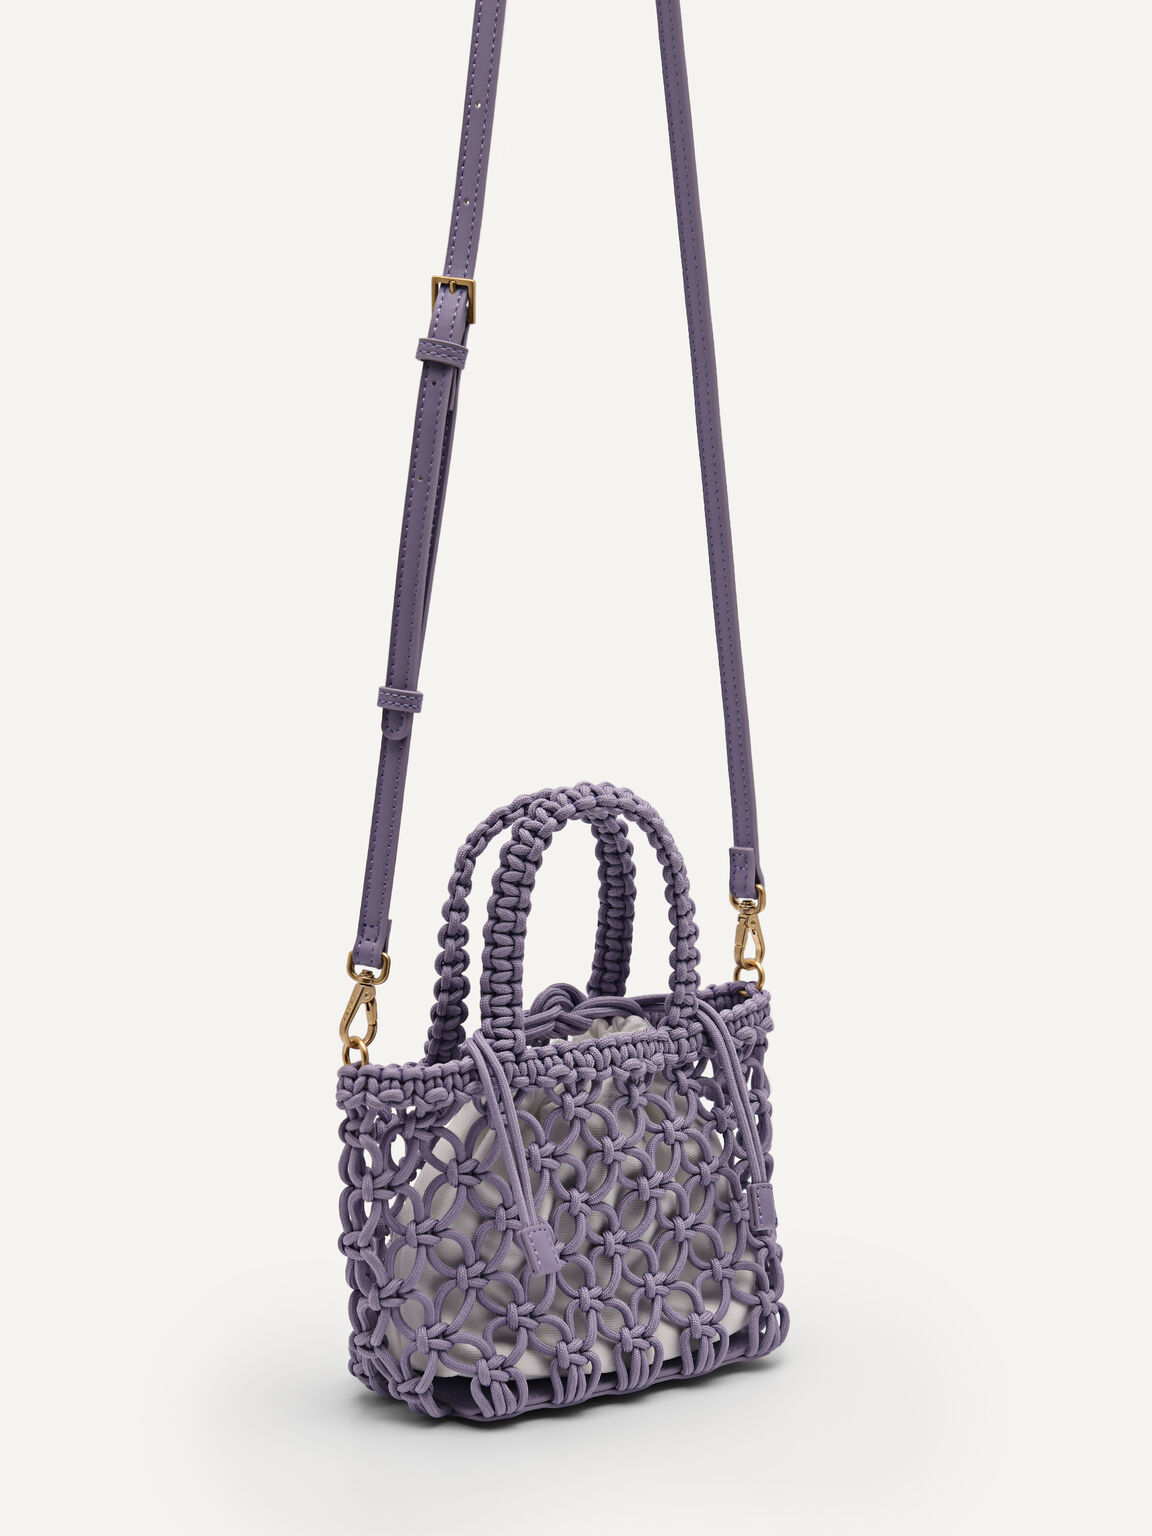 Mosaic Shoulder Bag, Lilac